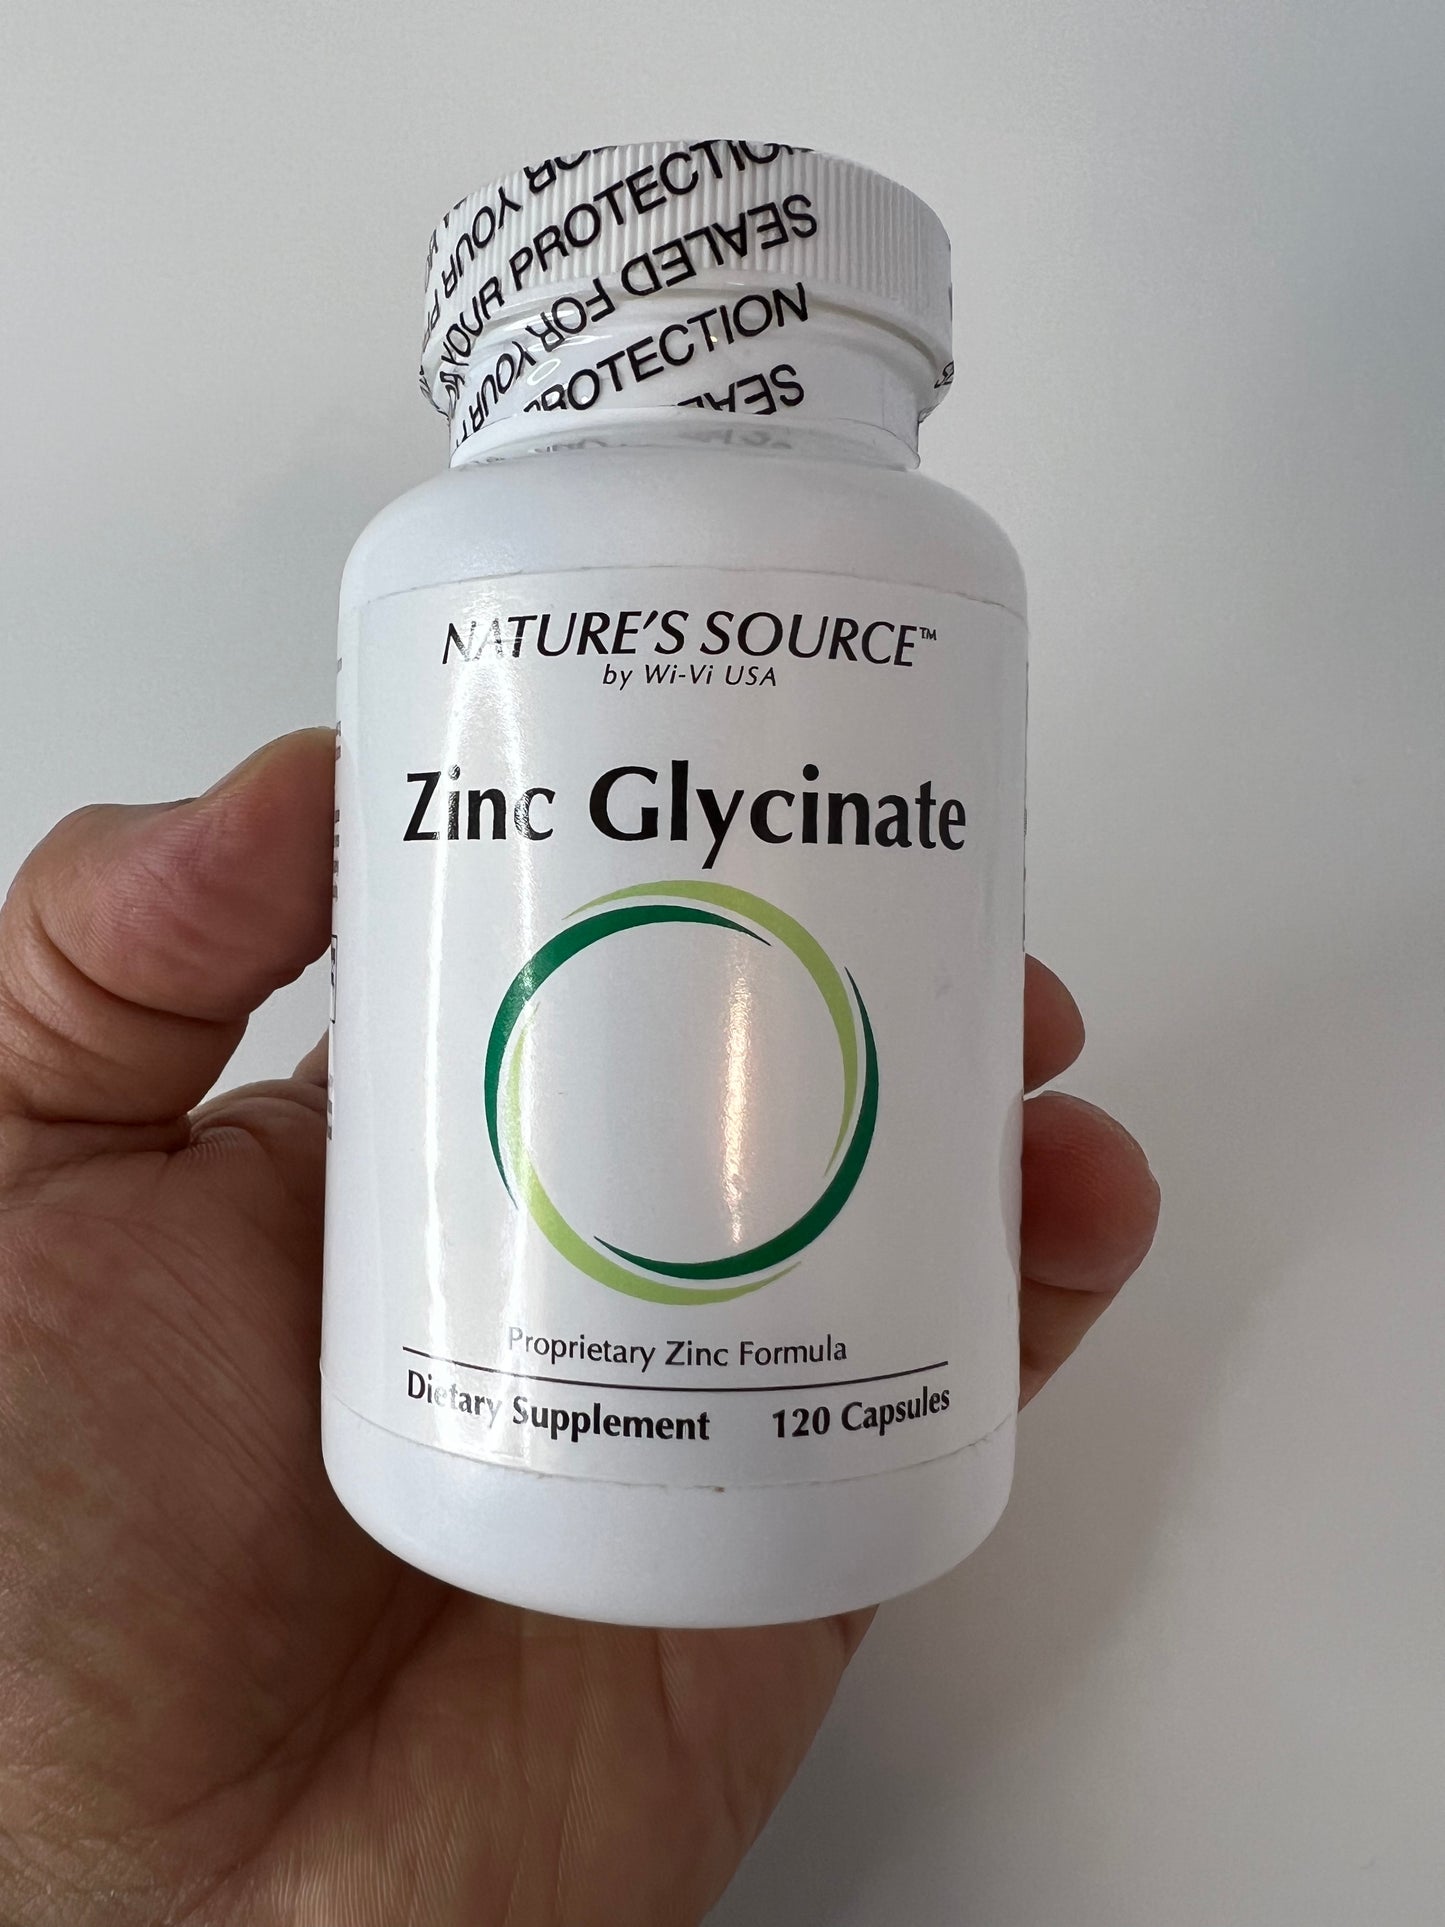 Zinc Glycinate - Proprietary Zinc Formula by Nature's Source